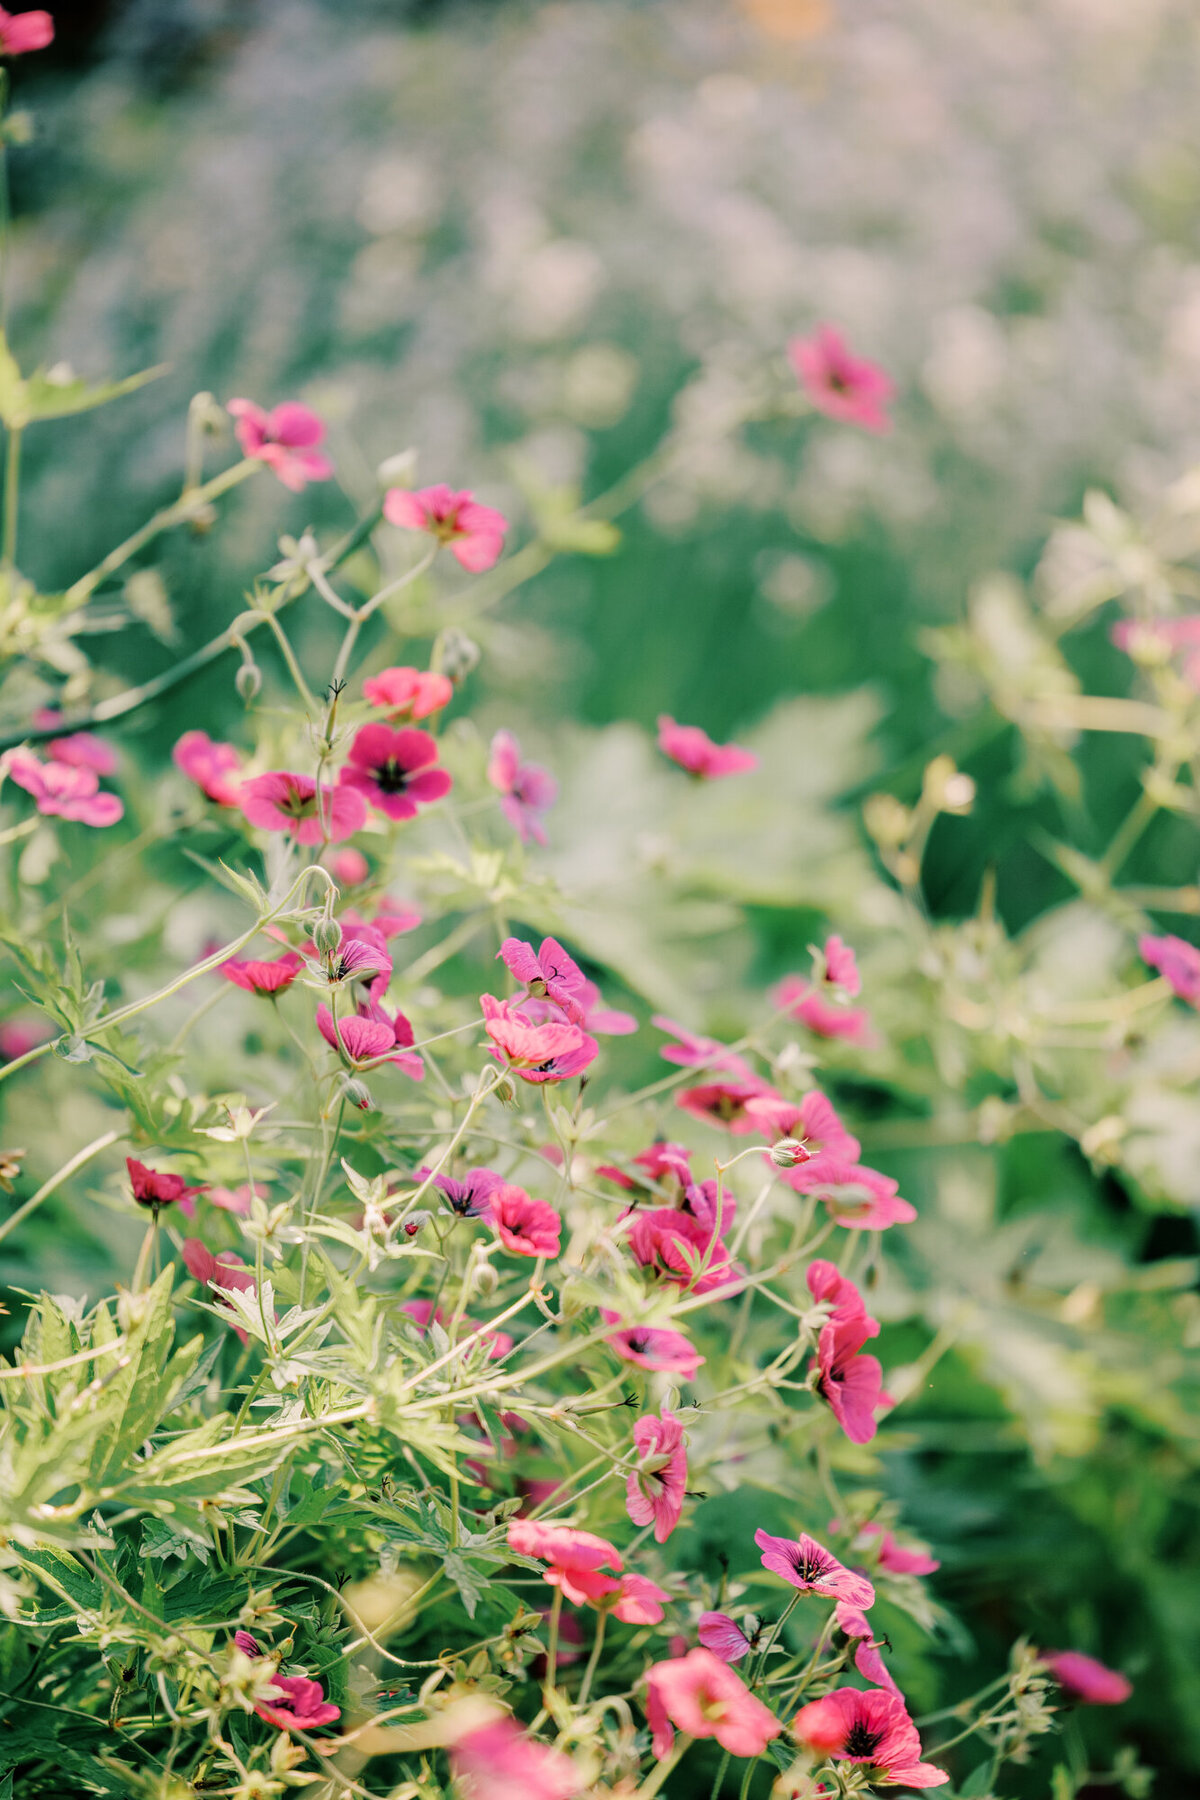 Beautiful flowers growing in an english walled garden in Glencoe Illinois